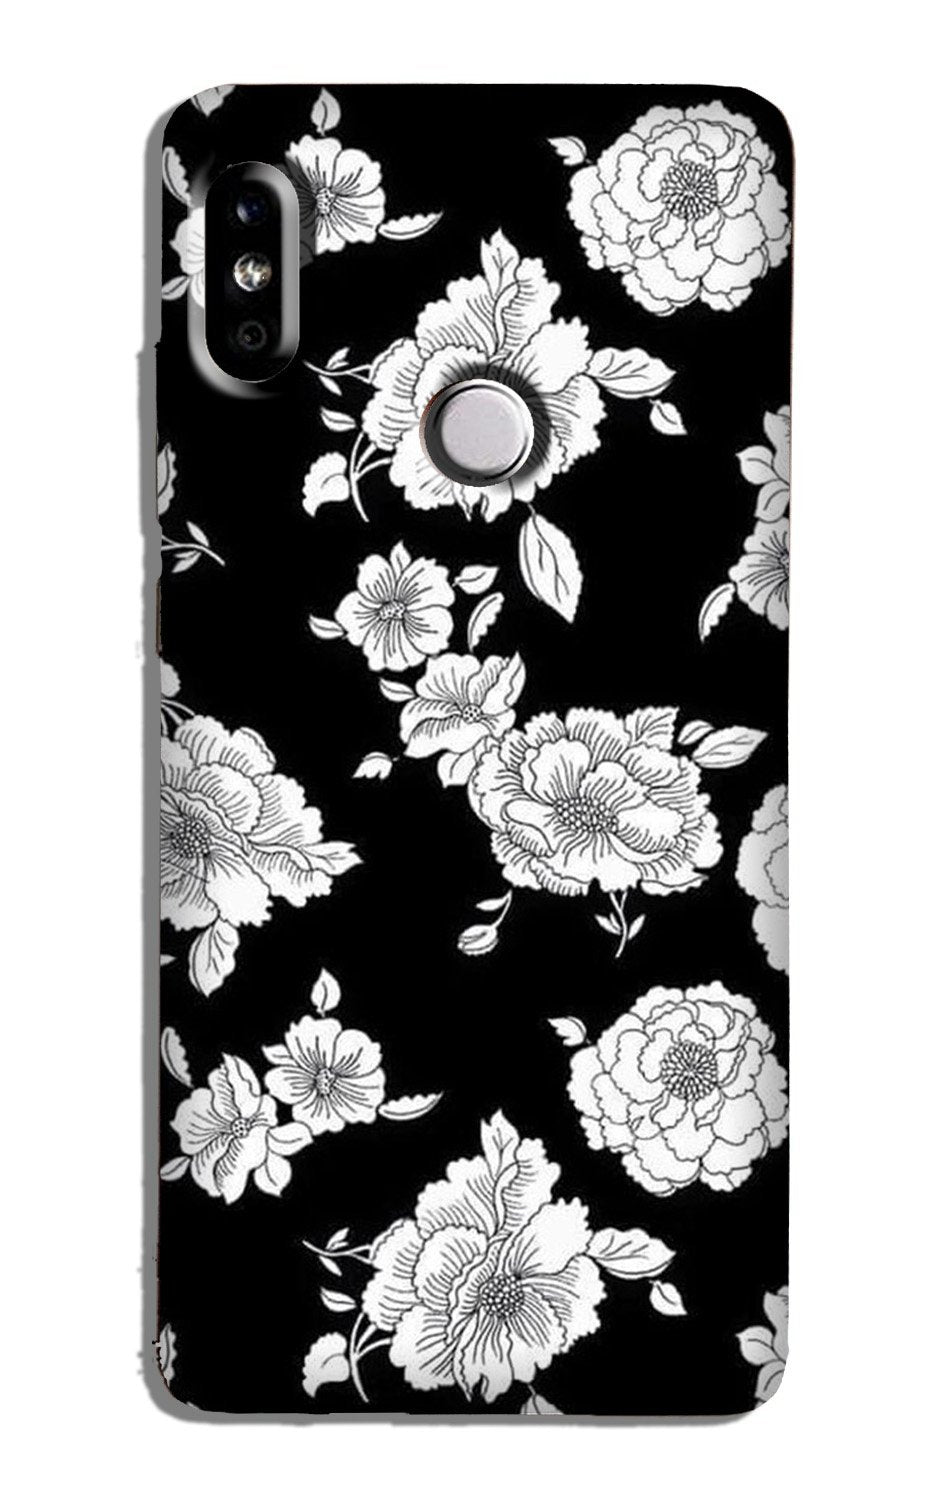 White flowers Black Background Case for Xiaomi Redmi 7